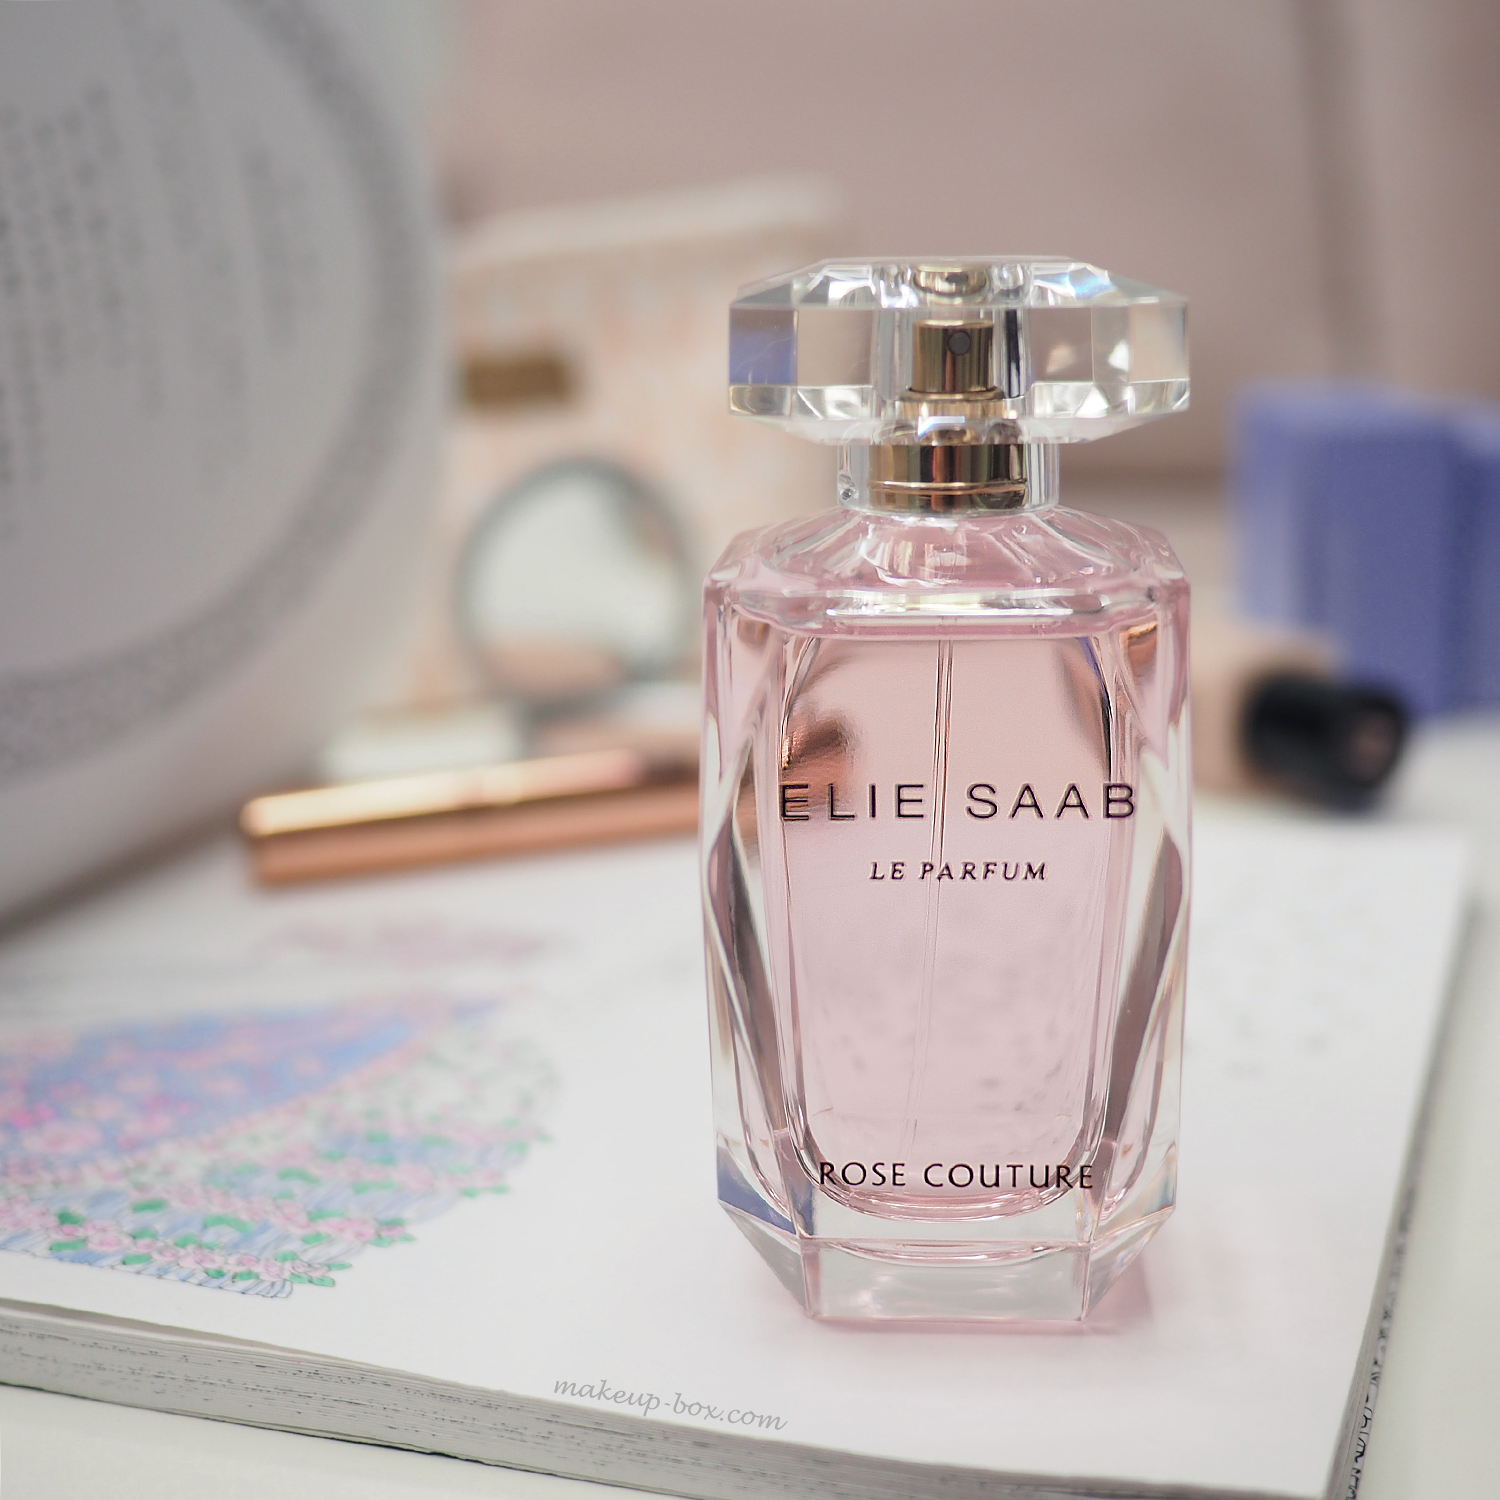 Elie Saab Le Parfum Rose Couture Fragrance Review What Laura Loves ...